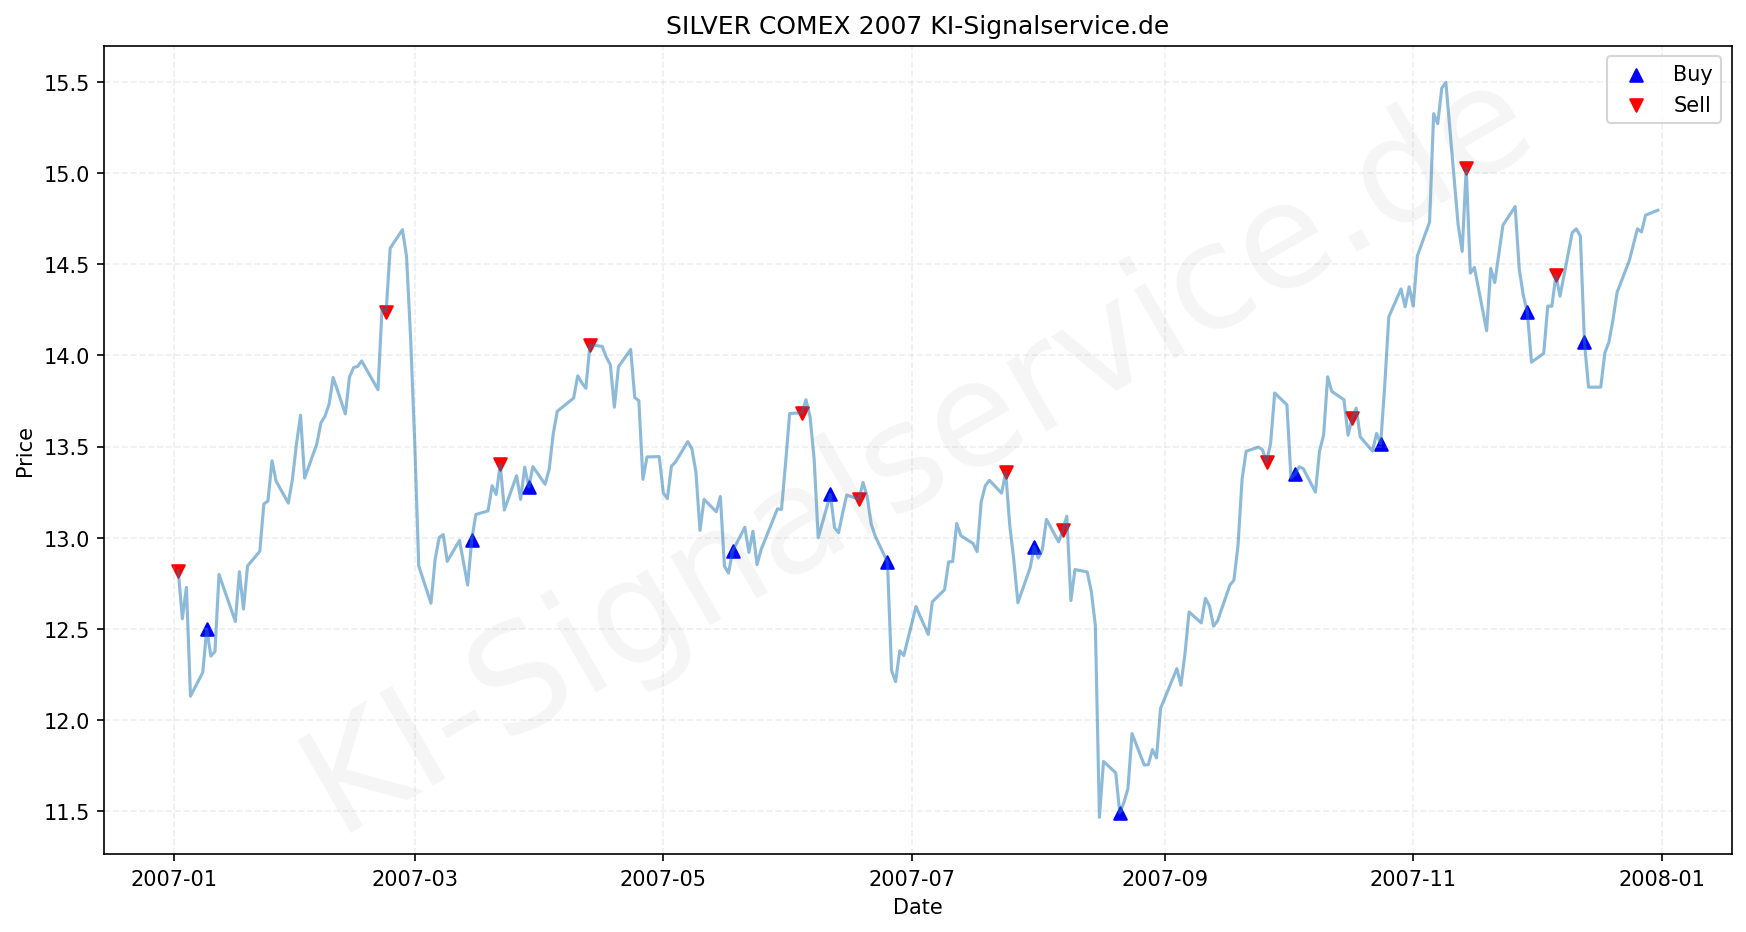 Silver Chart - KI Tradingsignale 2007